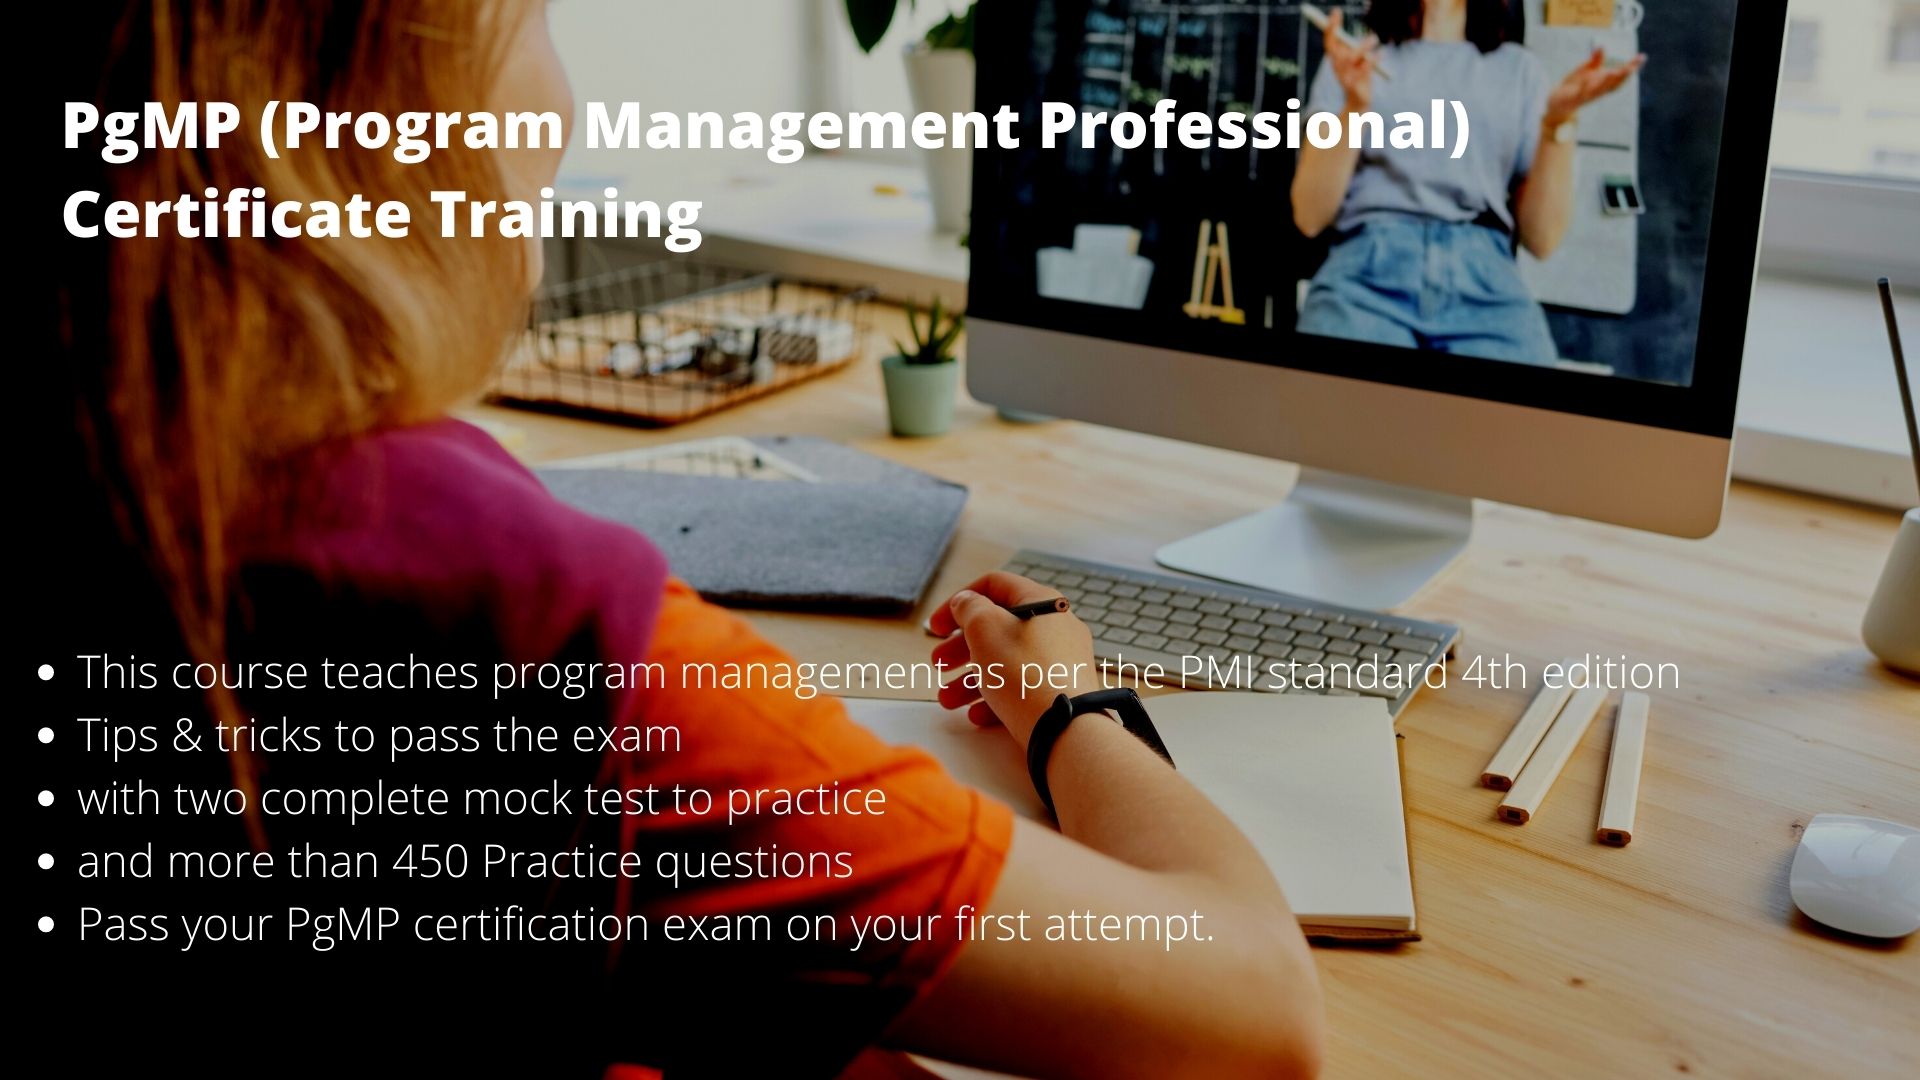 PgMP (Program Management Professional) Certificate Training